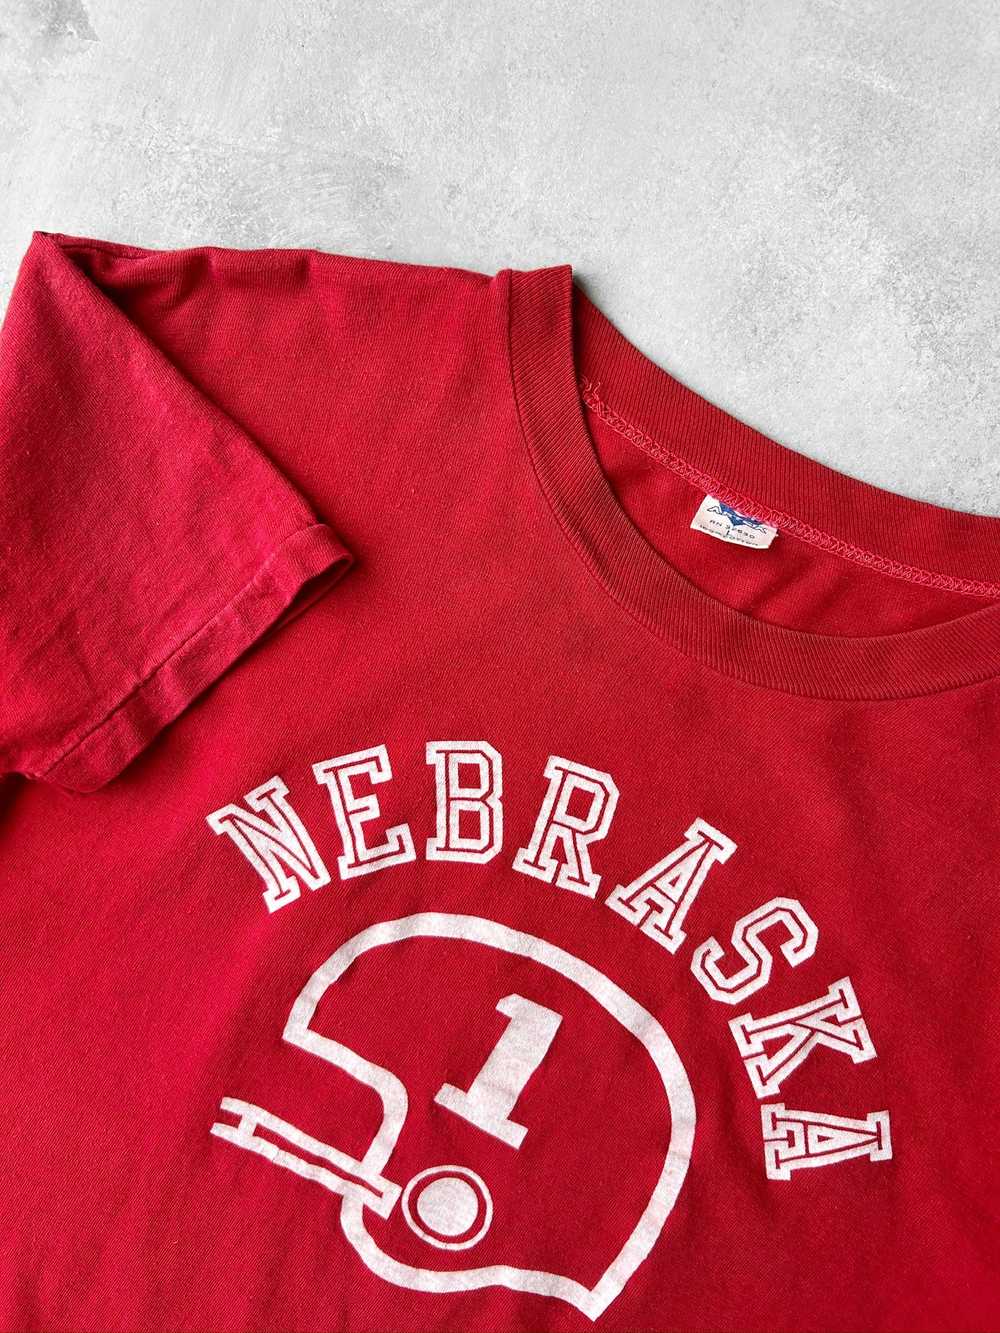 University of Nebraska T-Shirt 70's - Medium - image 2